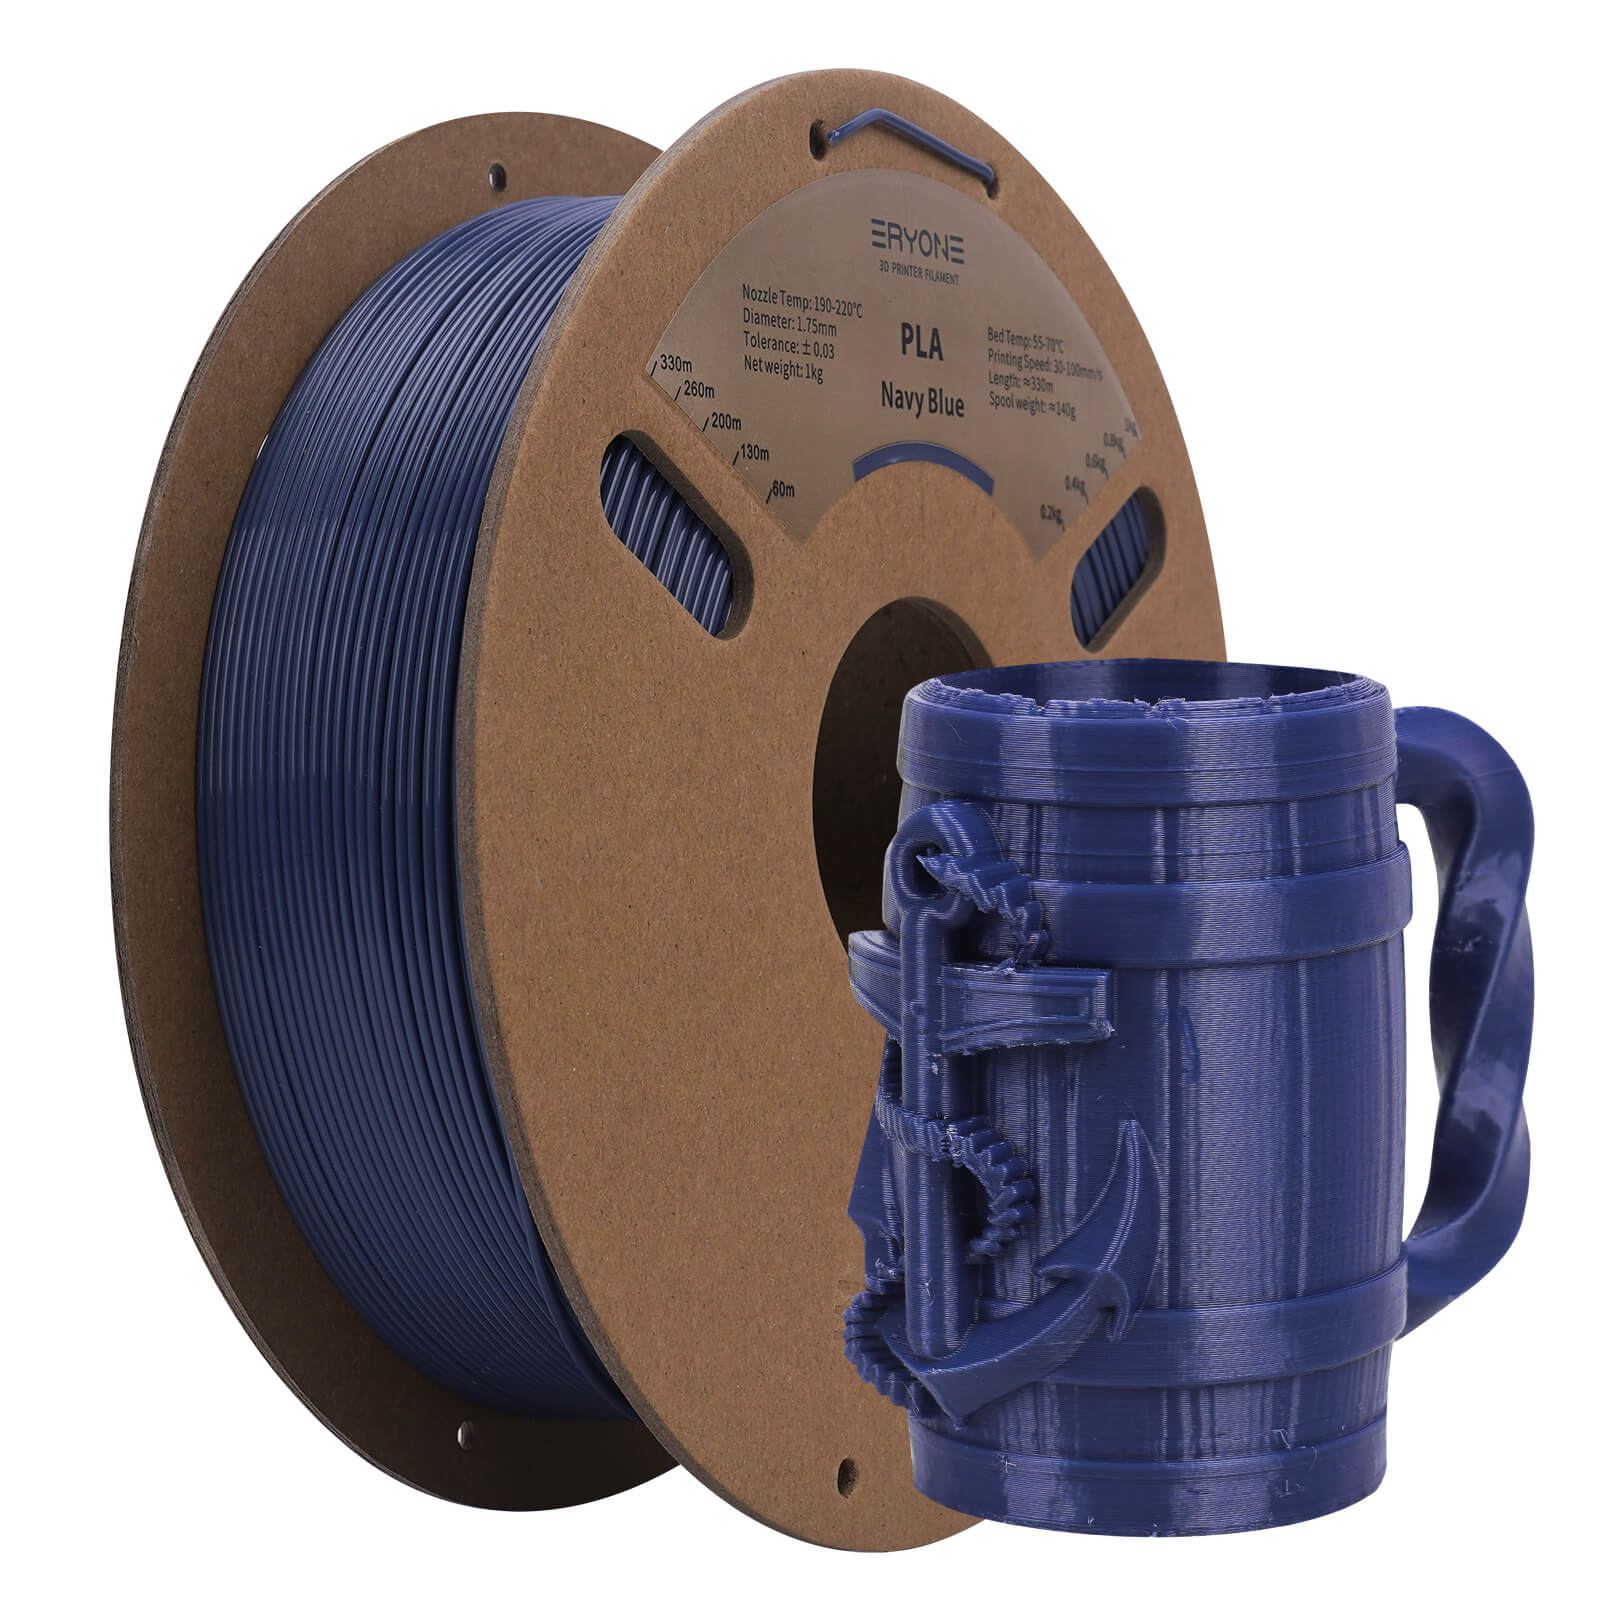 ERYONE PLA 3D Printer Filament 1.75mm,Dimensional Accuracy +/- 0.05 mm 1kg, Navy Blue& Army Green